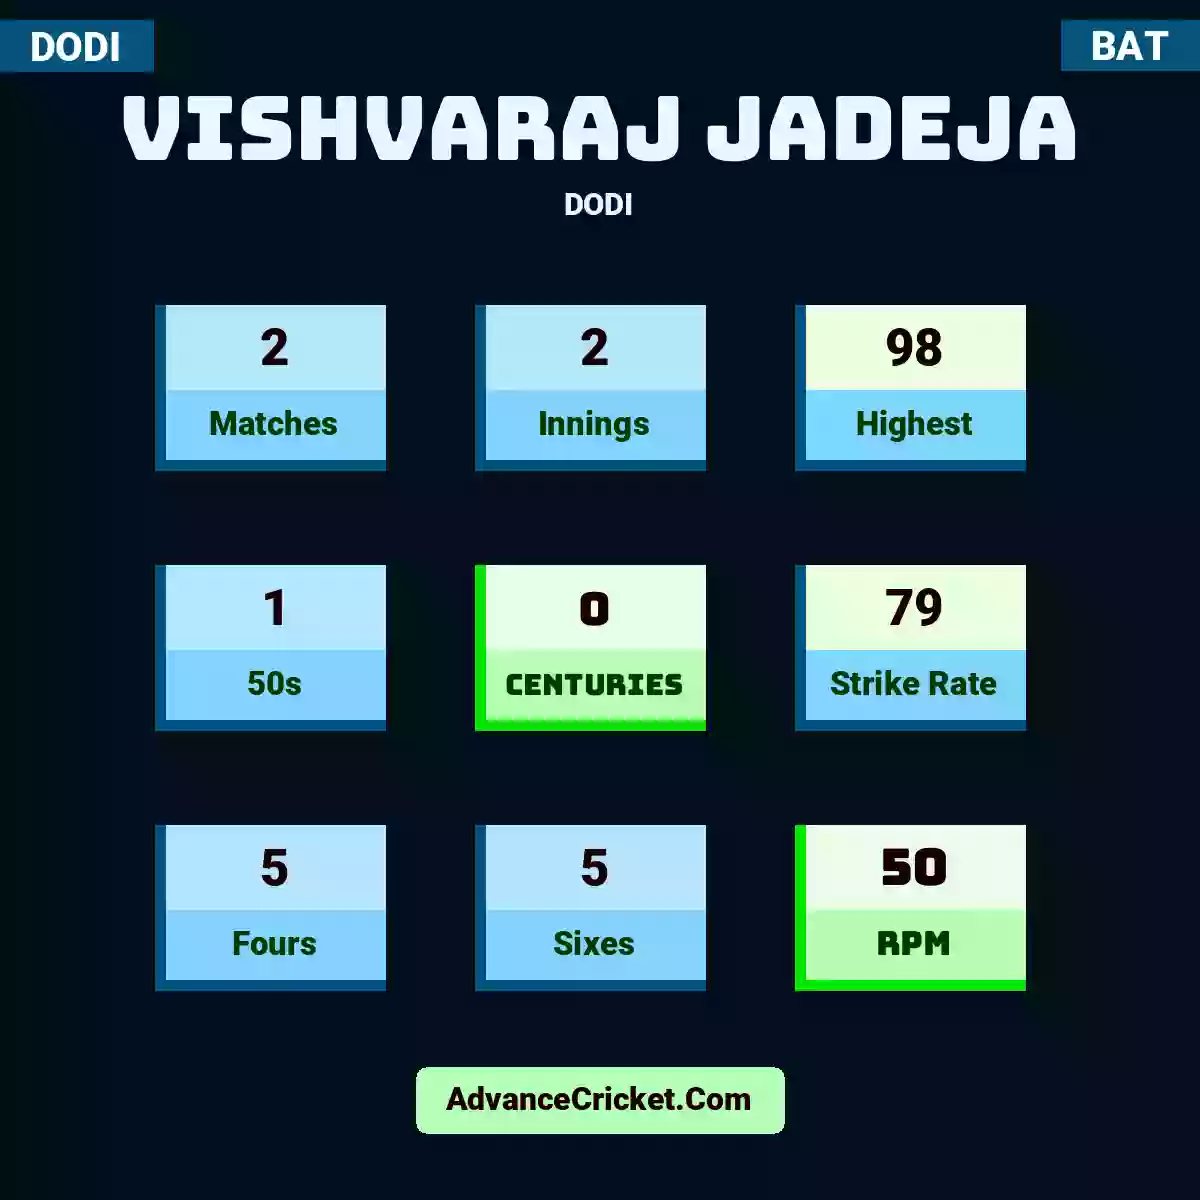 Vishvaraj Jadeja DODI , Vishvaraj Jadeja played 2 matches, scored 98 runs as highest, 1 half-centuries, and 0 centuries, with a strike rate of 79. V.Jadeja hit 5 fours and 5 sixes, with an RPM of 50.